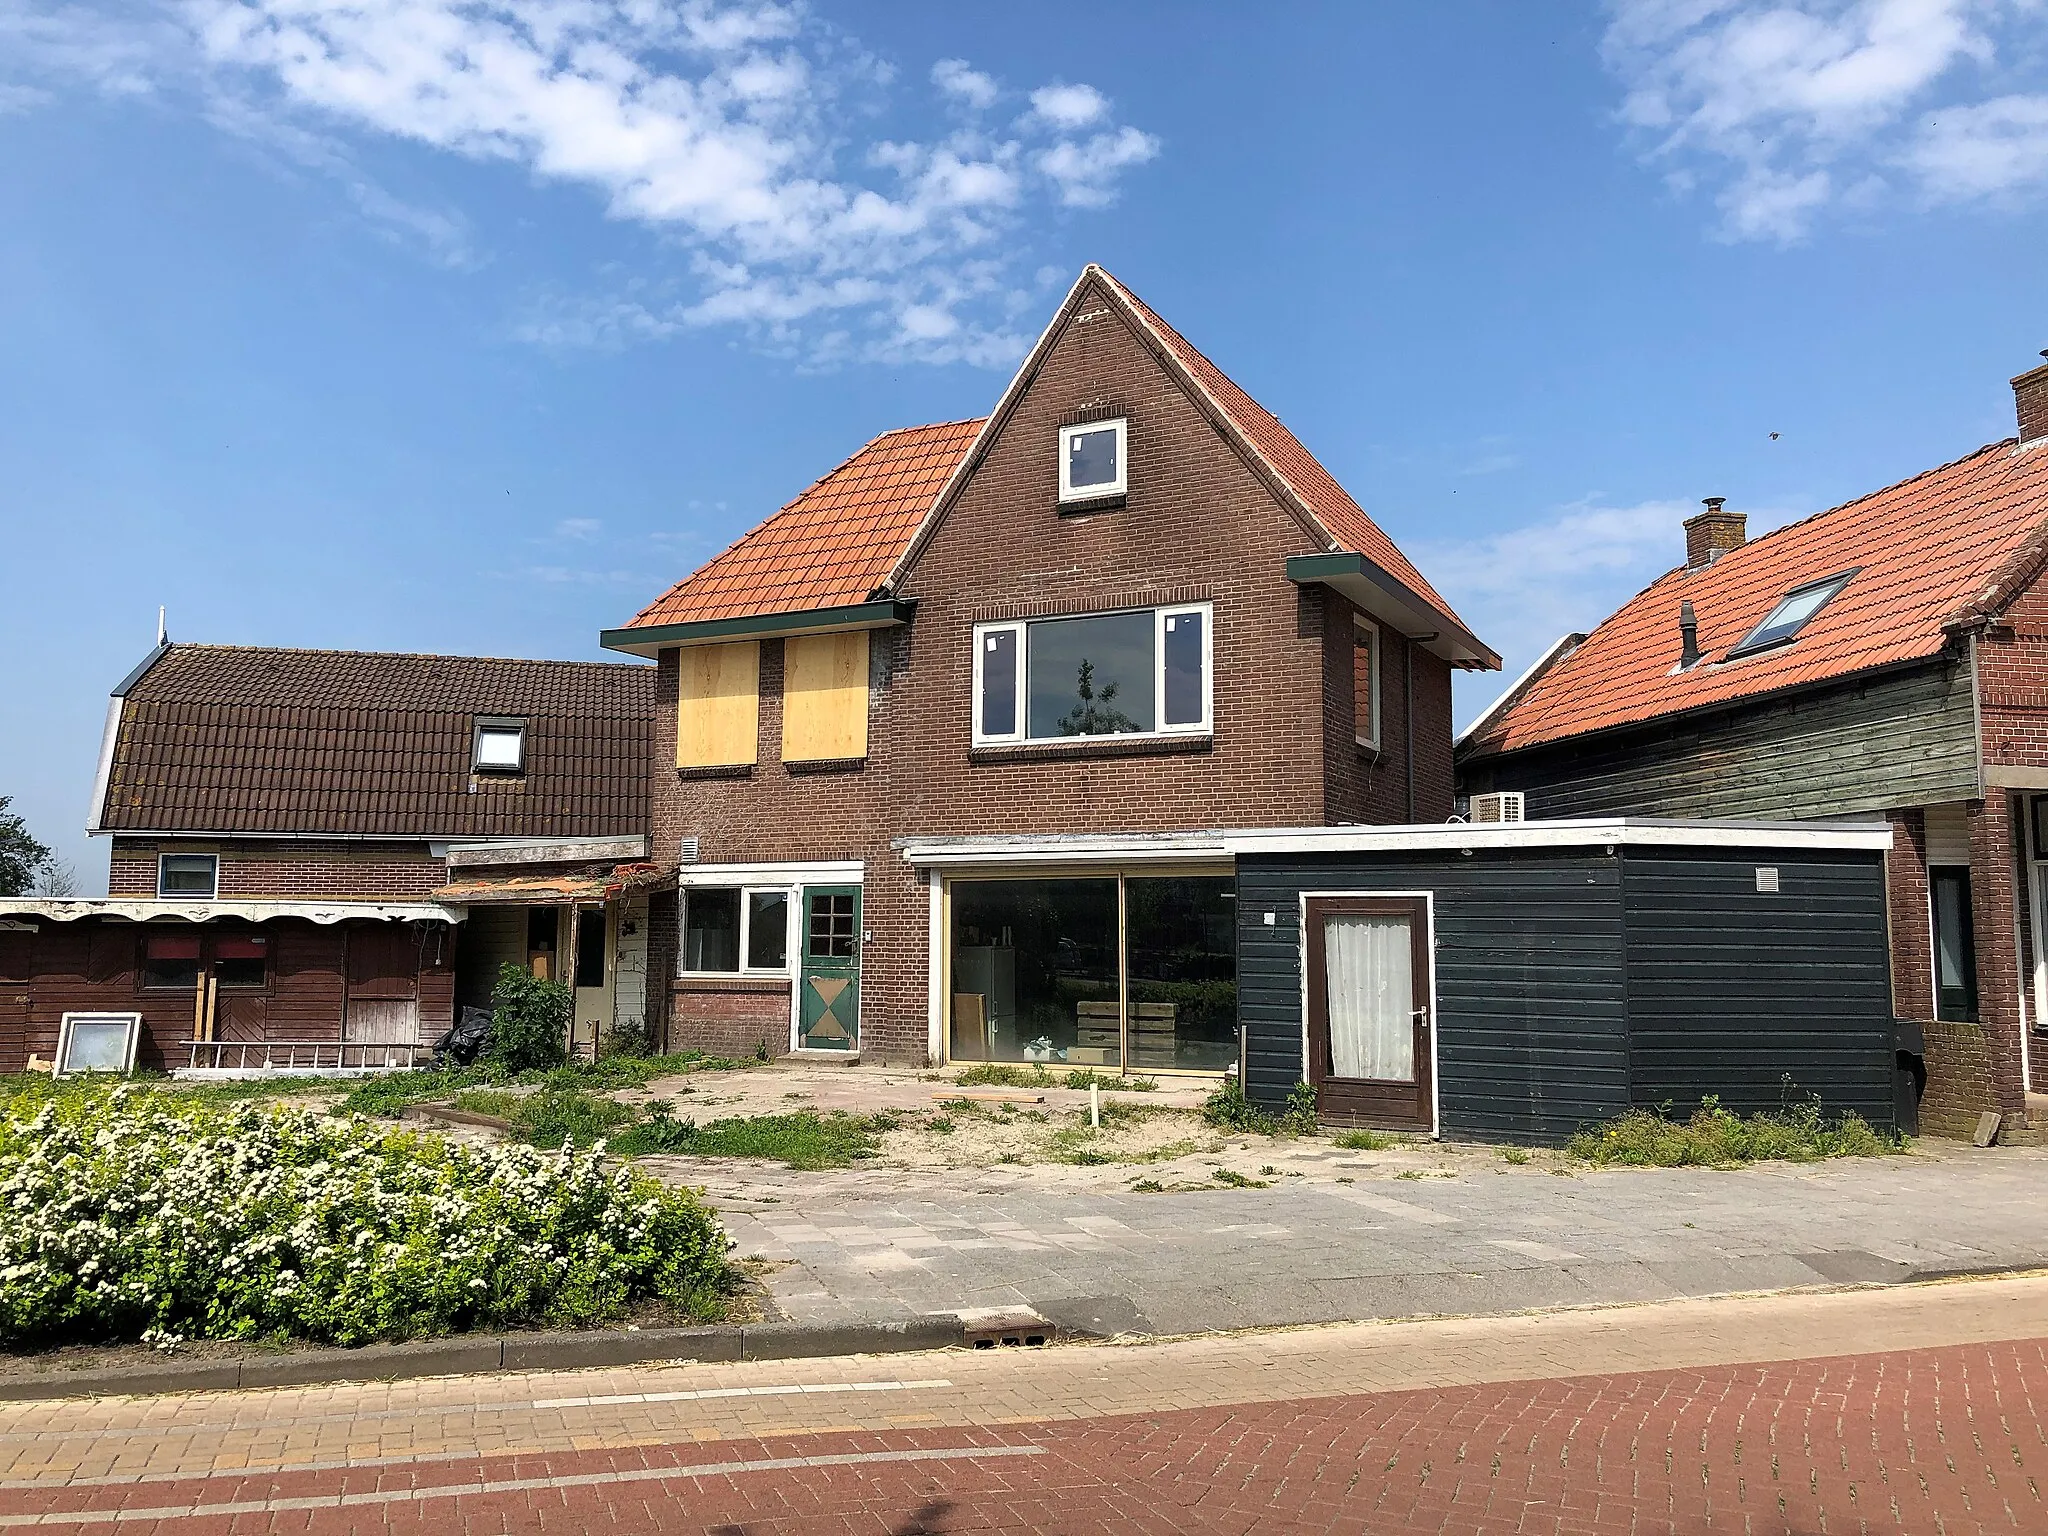 Photo showing: The house at Duimstraat No. 31 in Echtenerbrug is not a municipal listed building (De Fryske Marren municipality, Friesland Province, Netherlands).